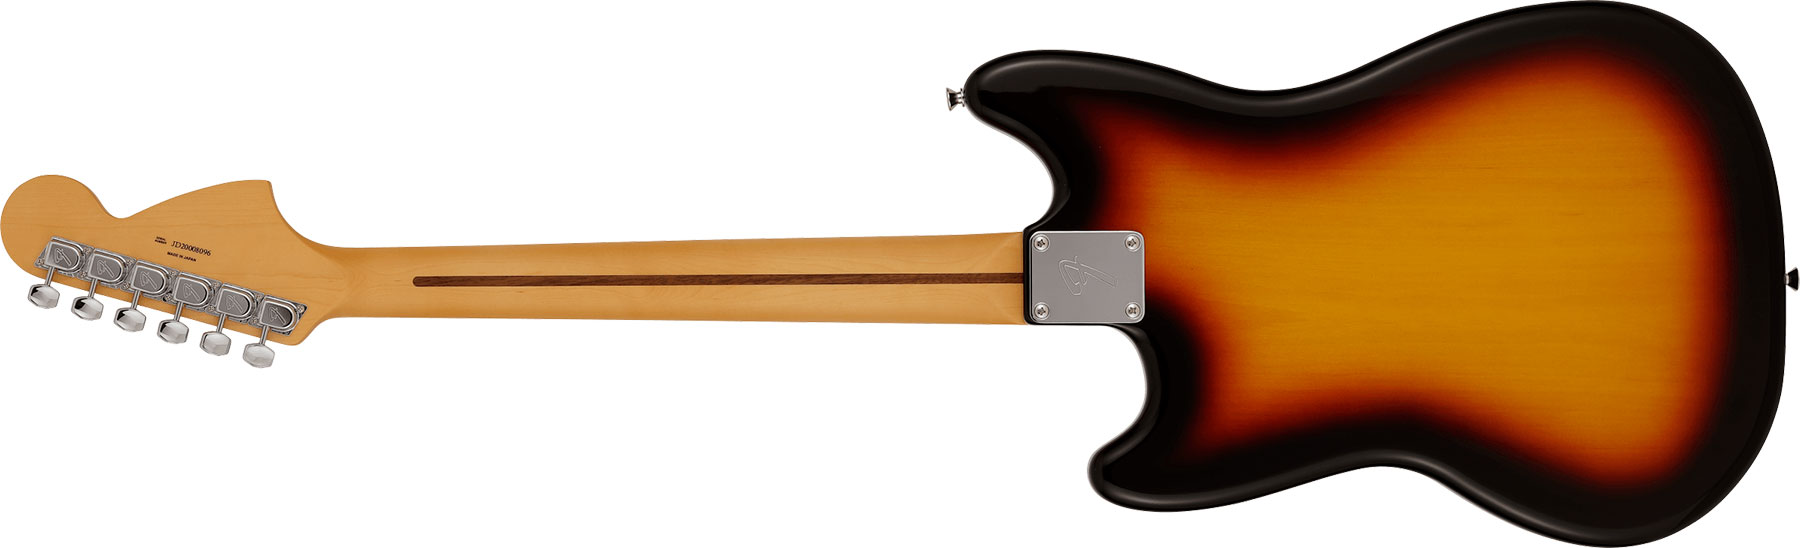 Fender Mustang Reverse Headstock Traditional Ltd Jap Hs Trem Rw - 3-color Sunburst - Guitare Électrique Forme Str - Variation 1